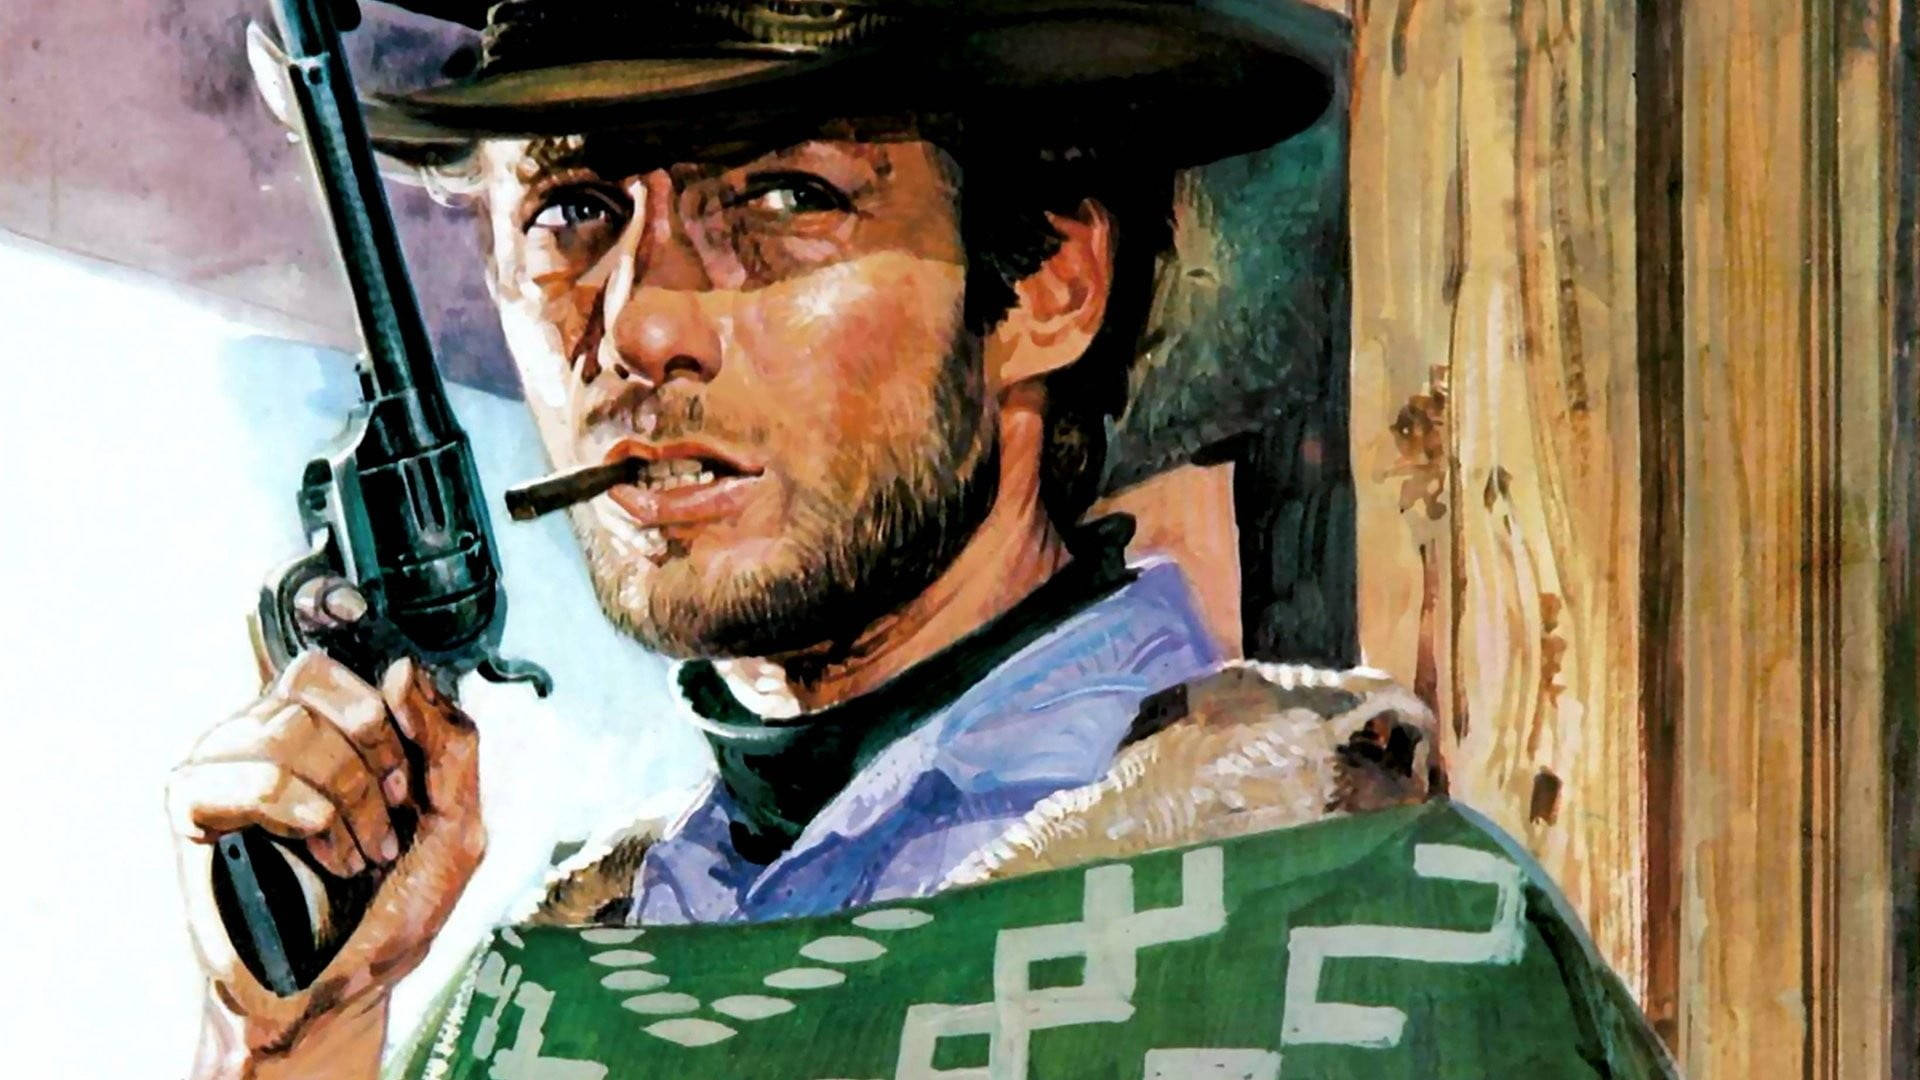 Clint Eastwood - A Legend Of Western Cinema